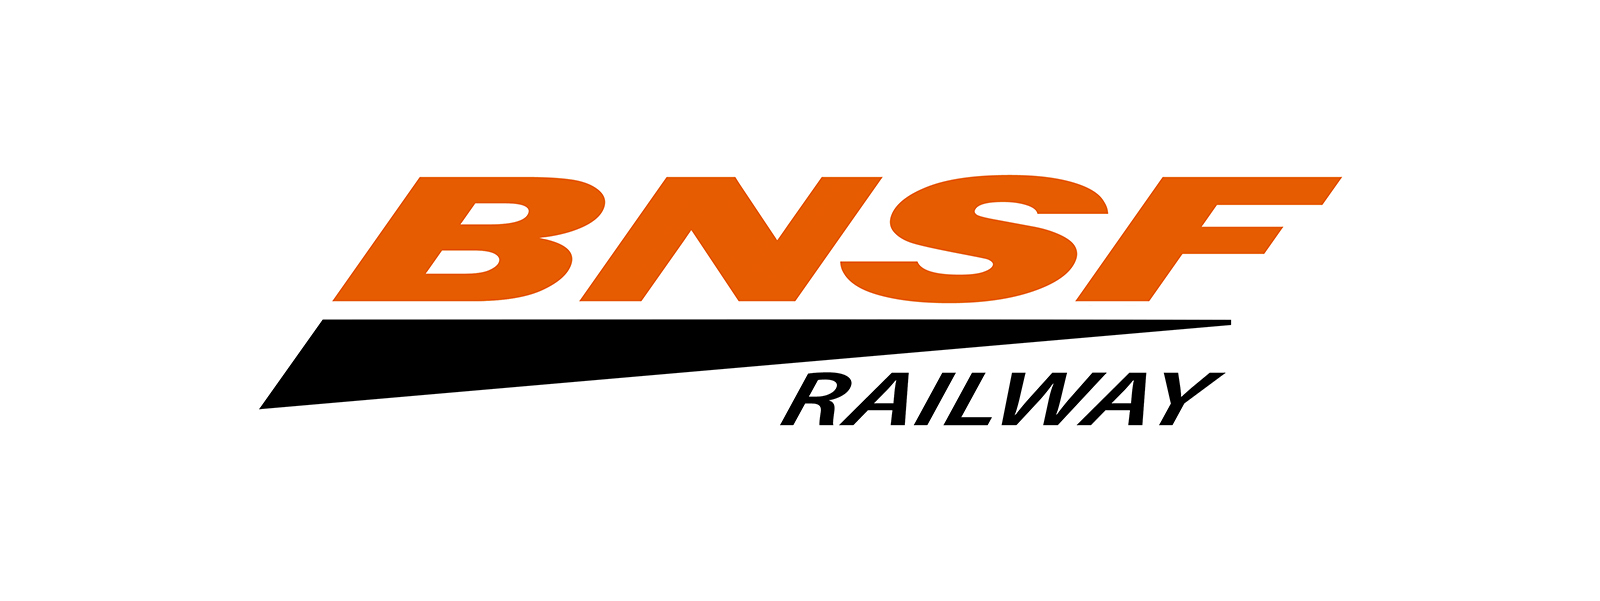 logos-BNSF